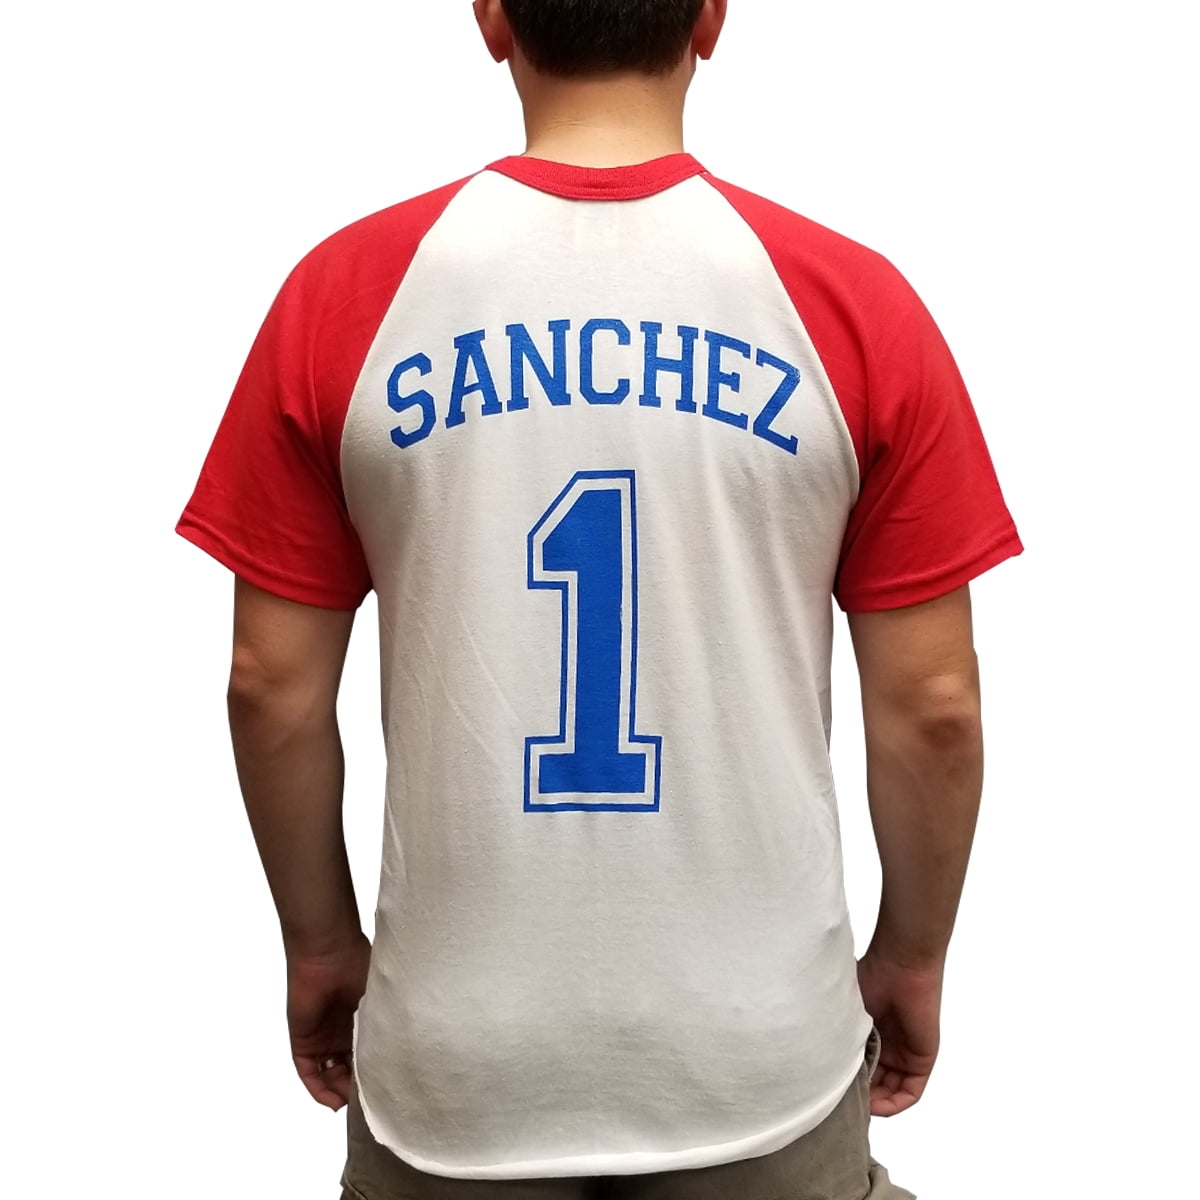 pablo sanchez backyard baseball shirt